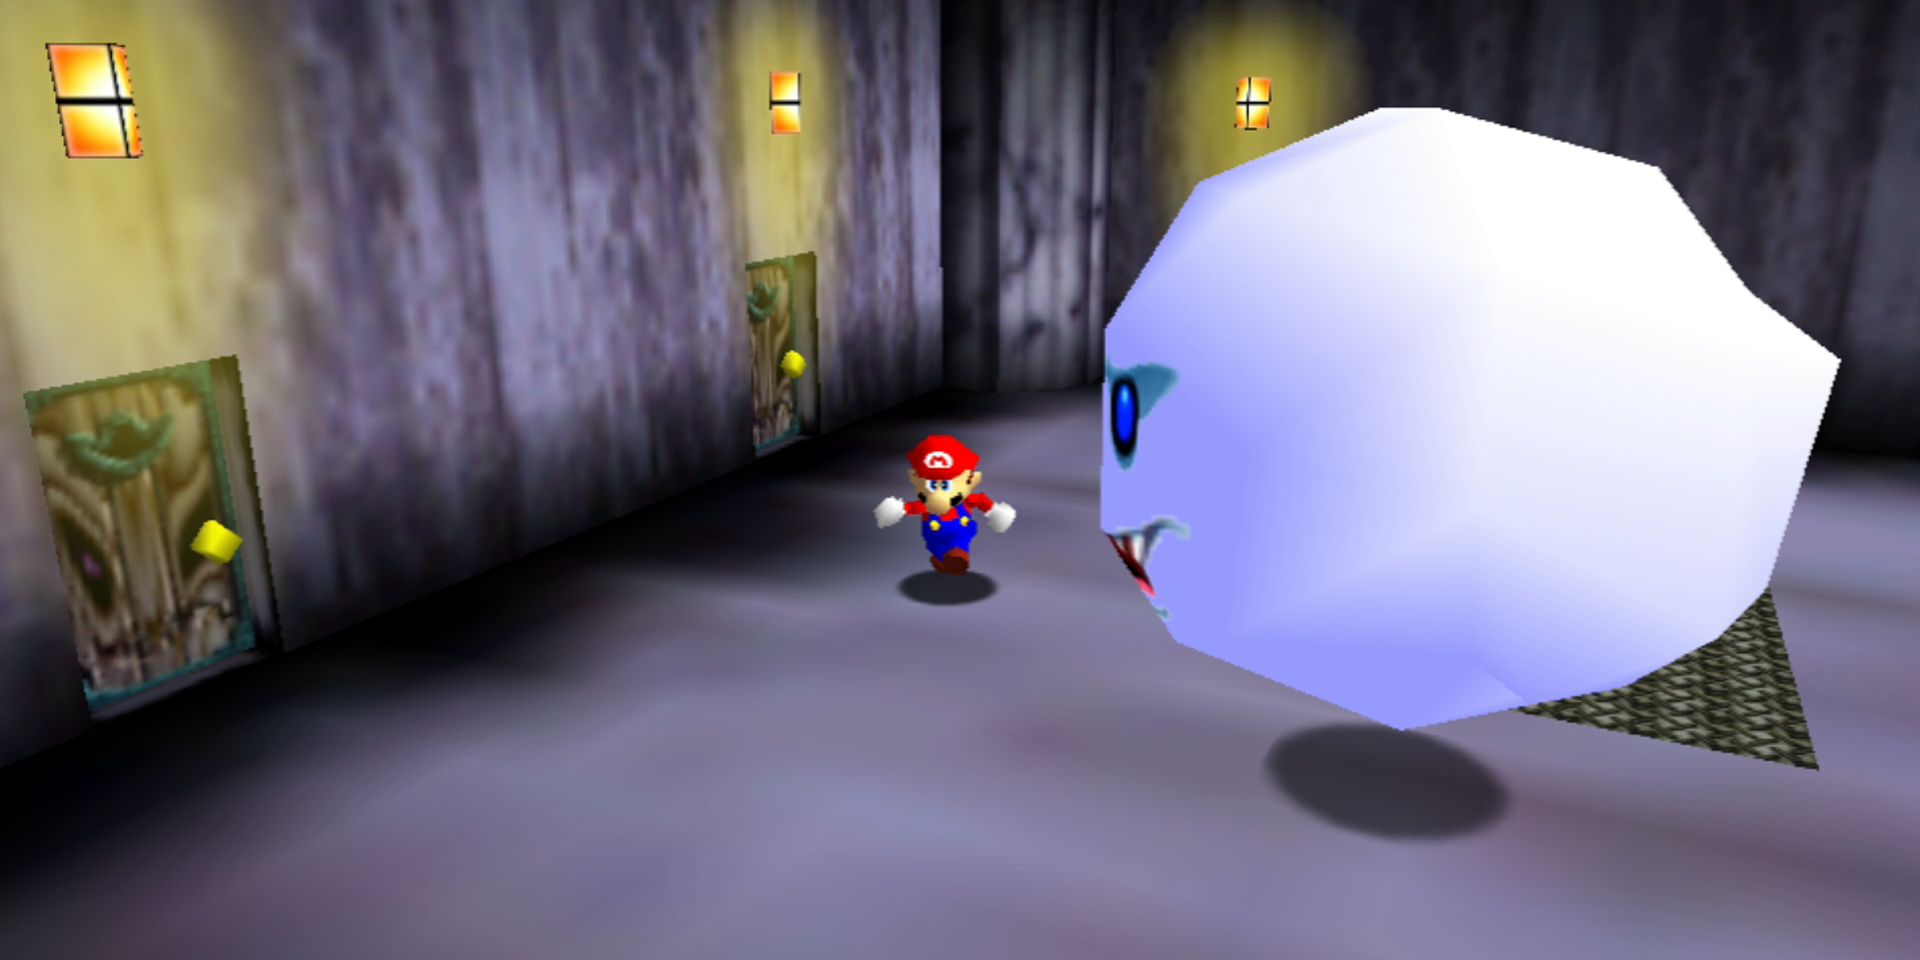 A Big Boo confronting Mario in Super Mario 64